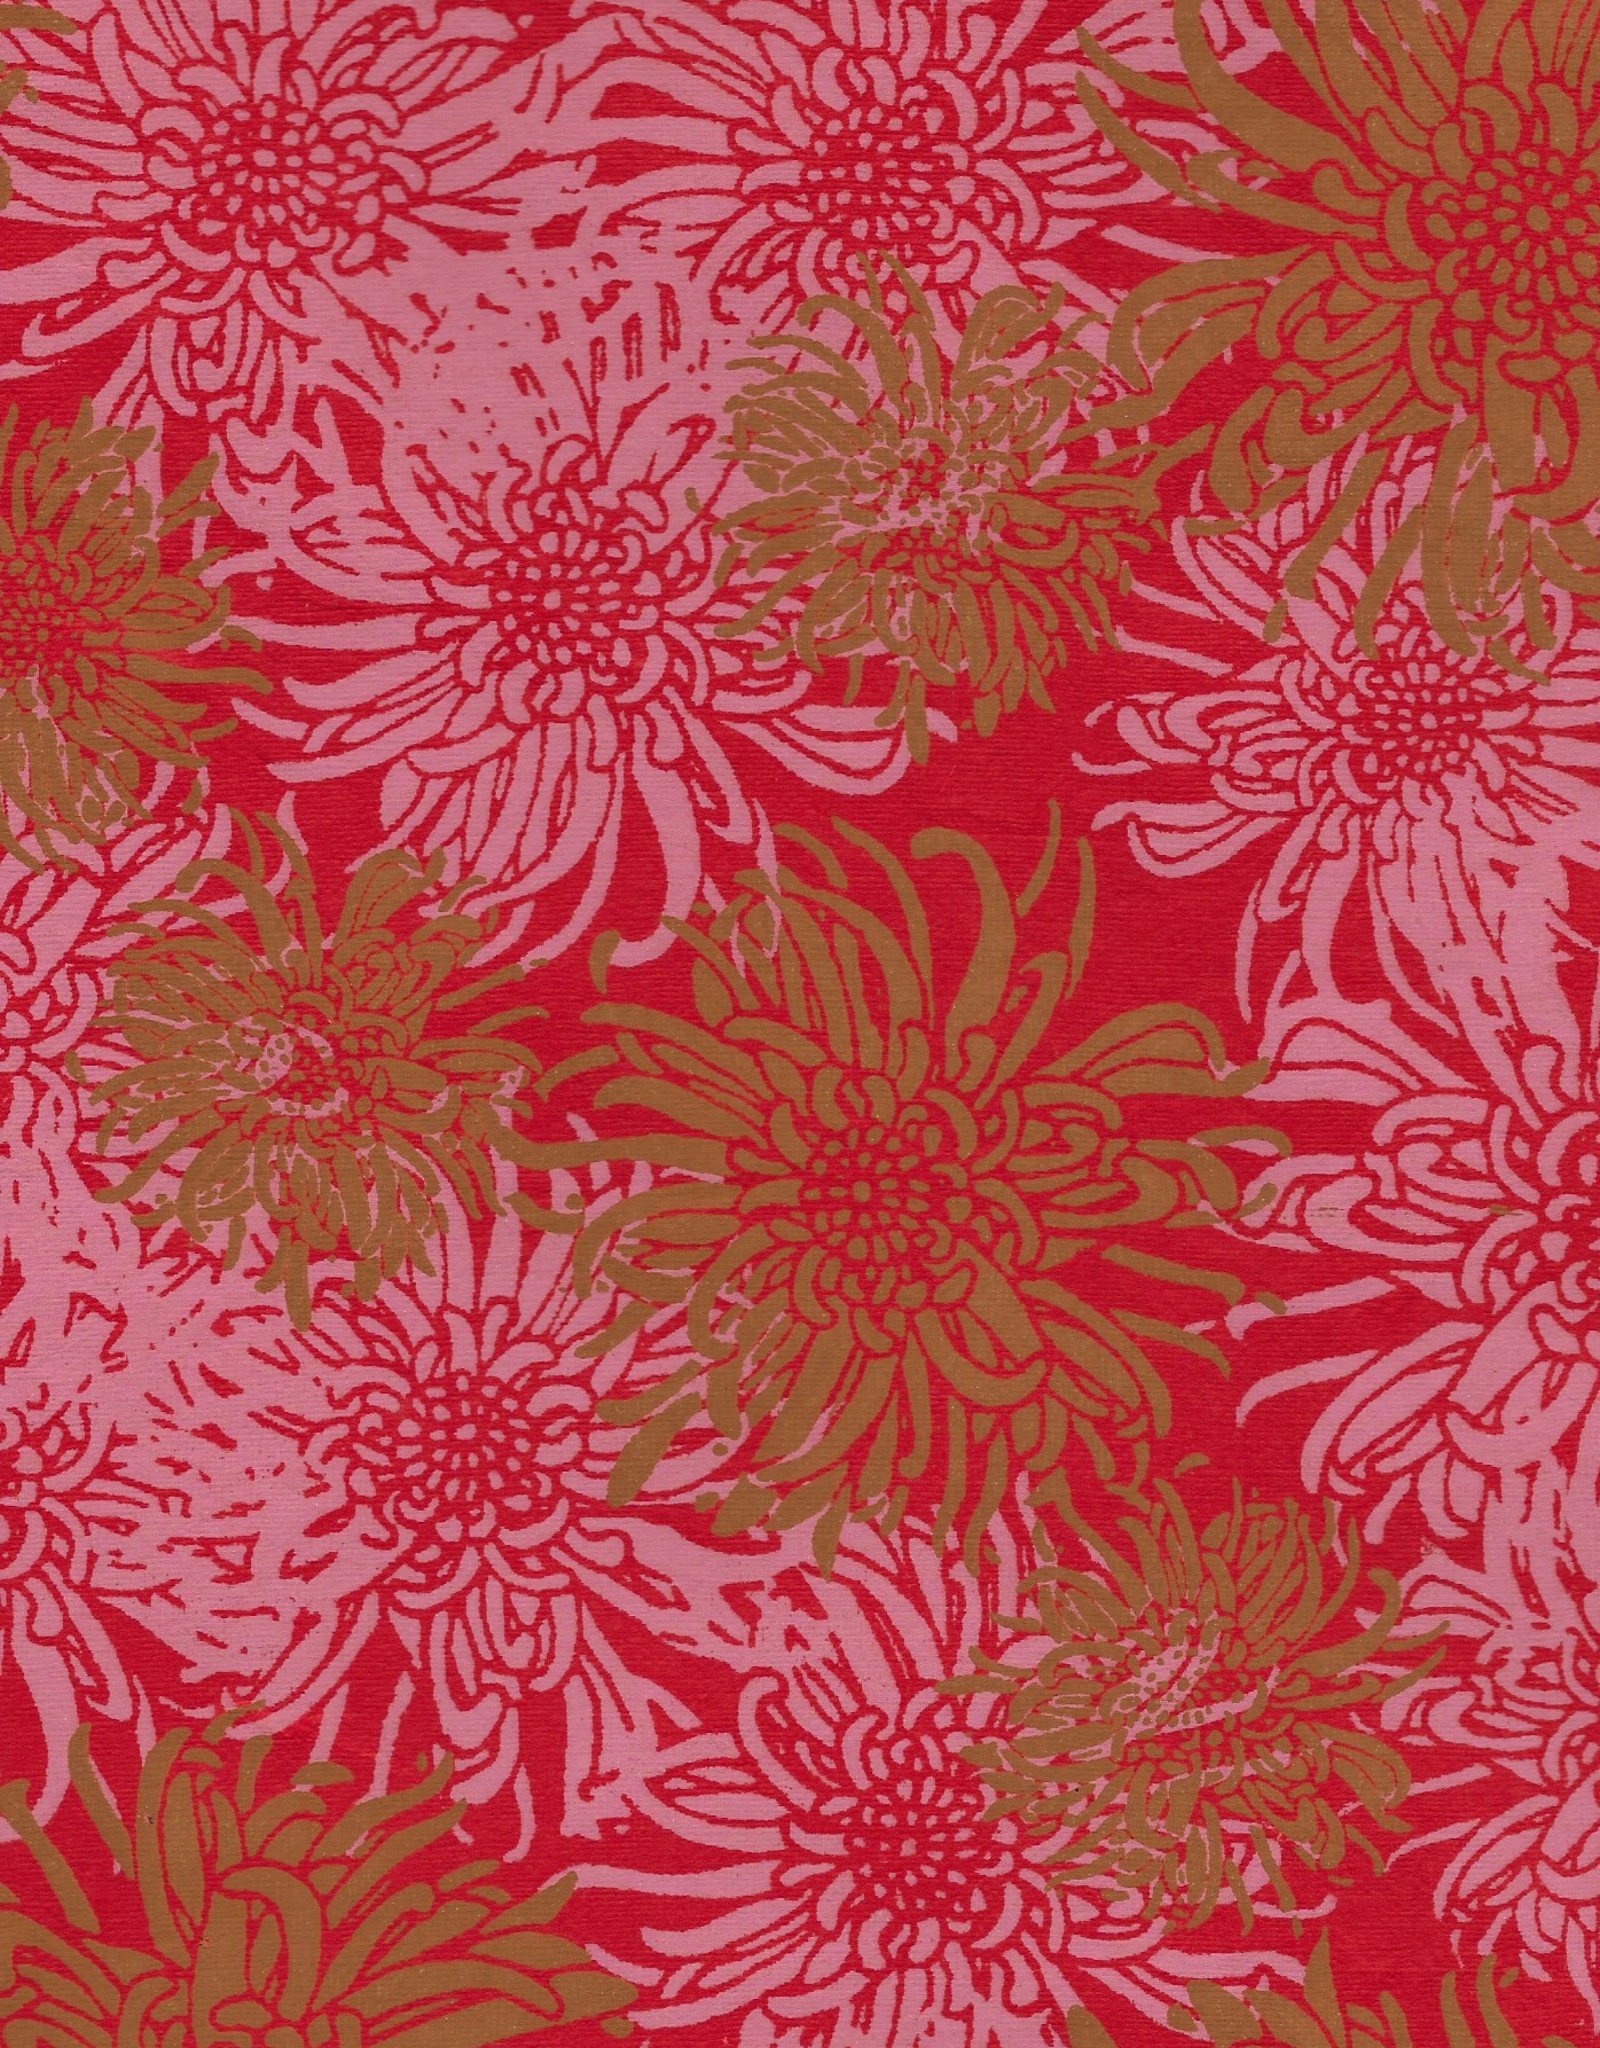 Laurelai Chrysanthemum on Red, 20" x 28"